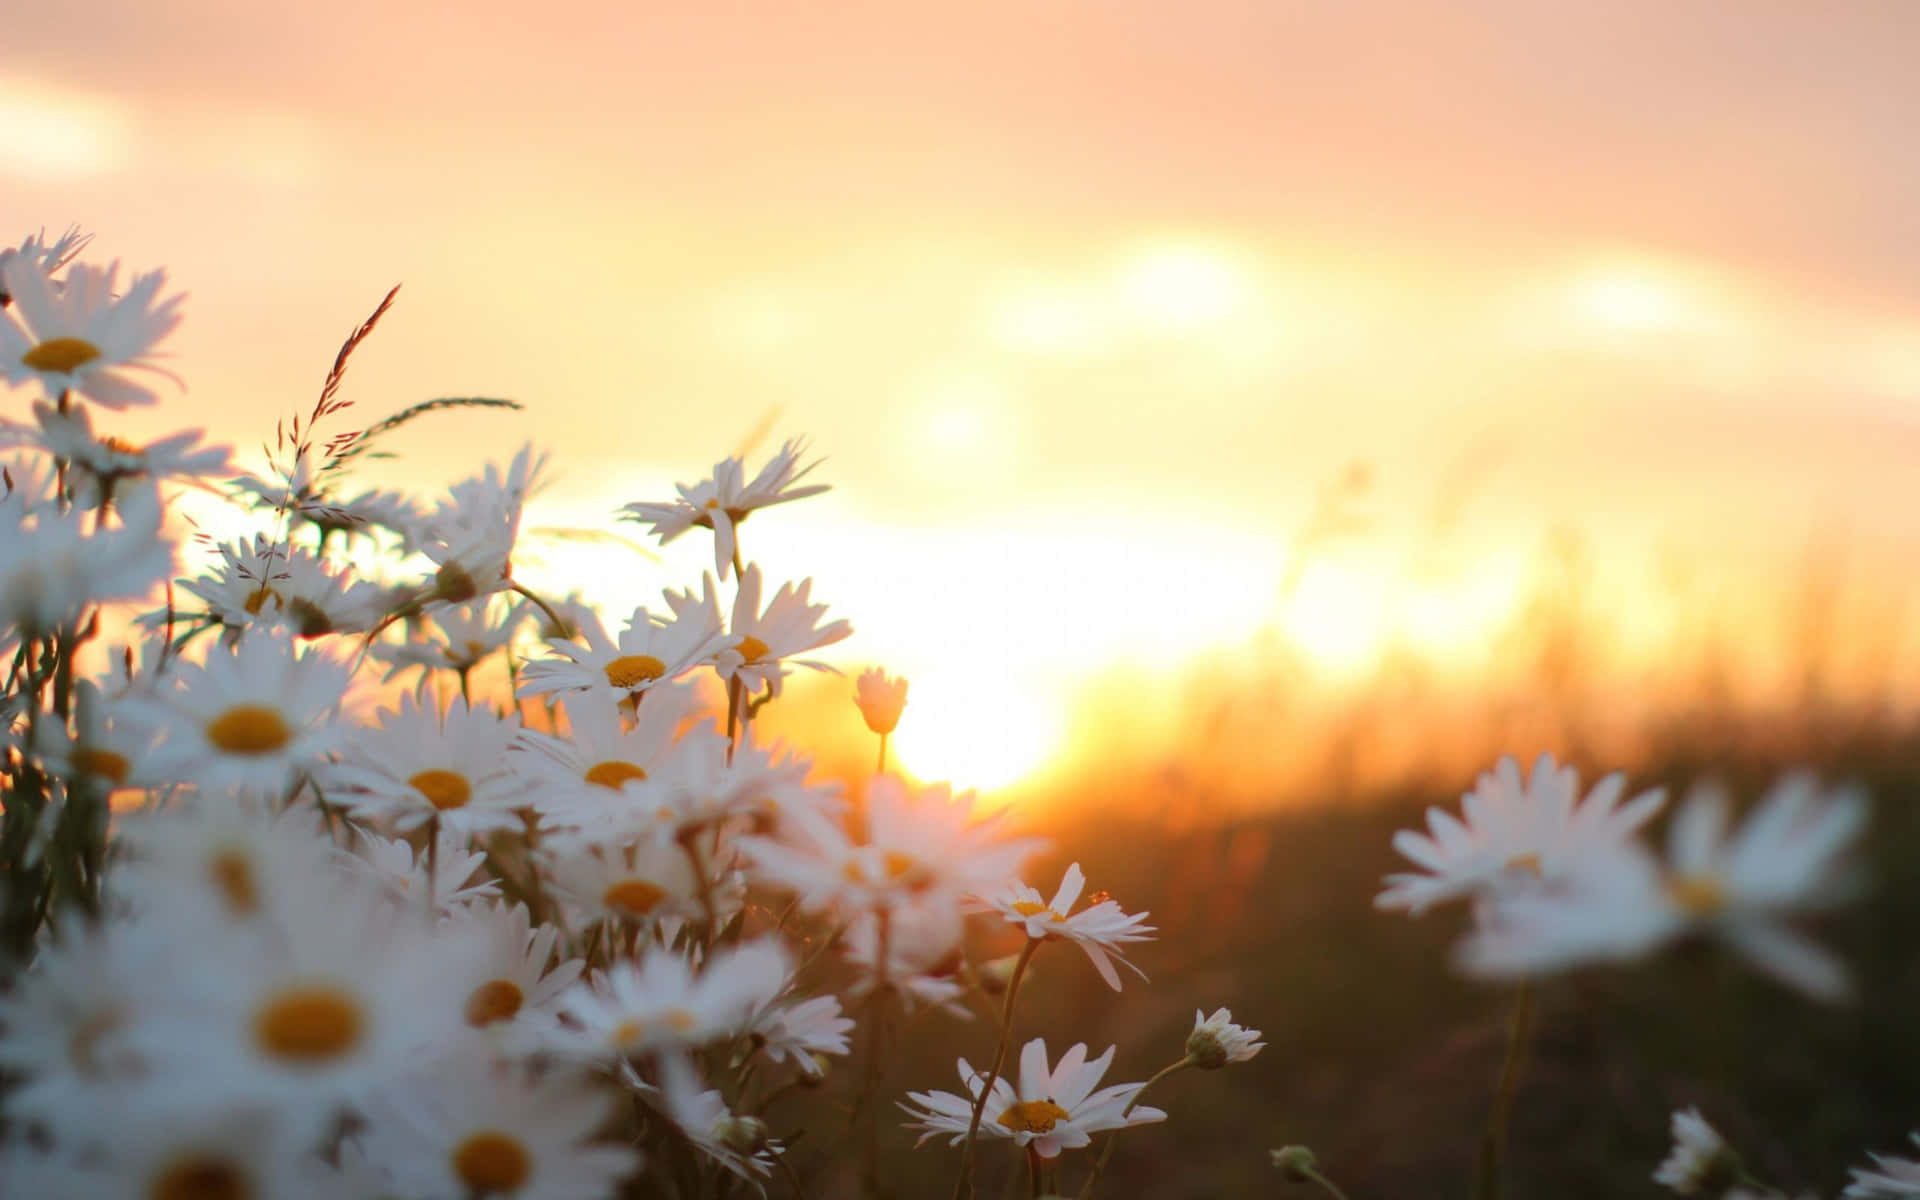 Enjoy the wonderfully vibrant petals of a beautiful daisy.